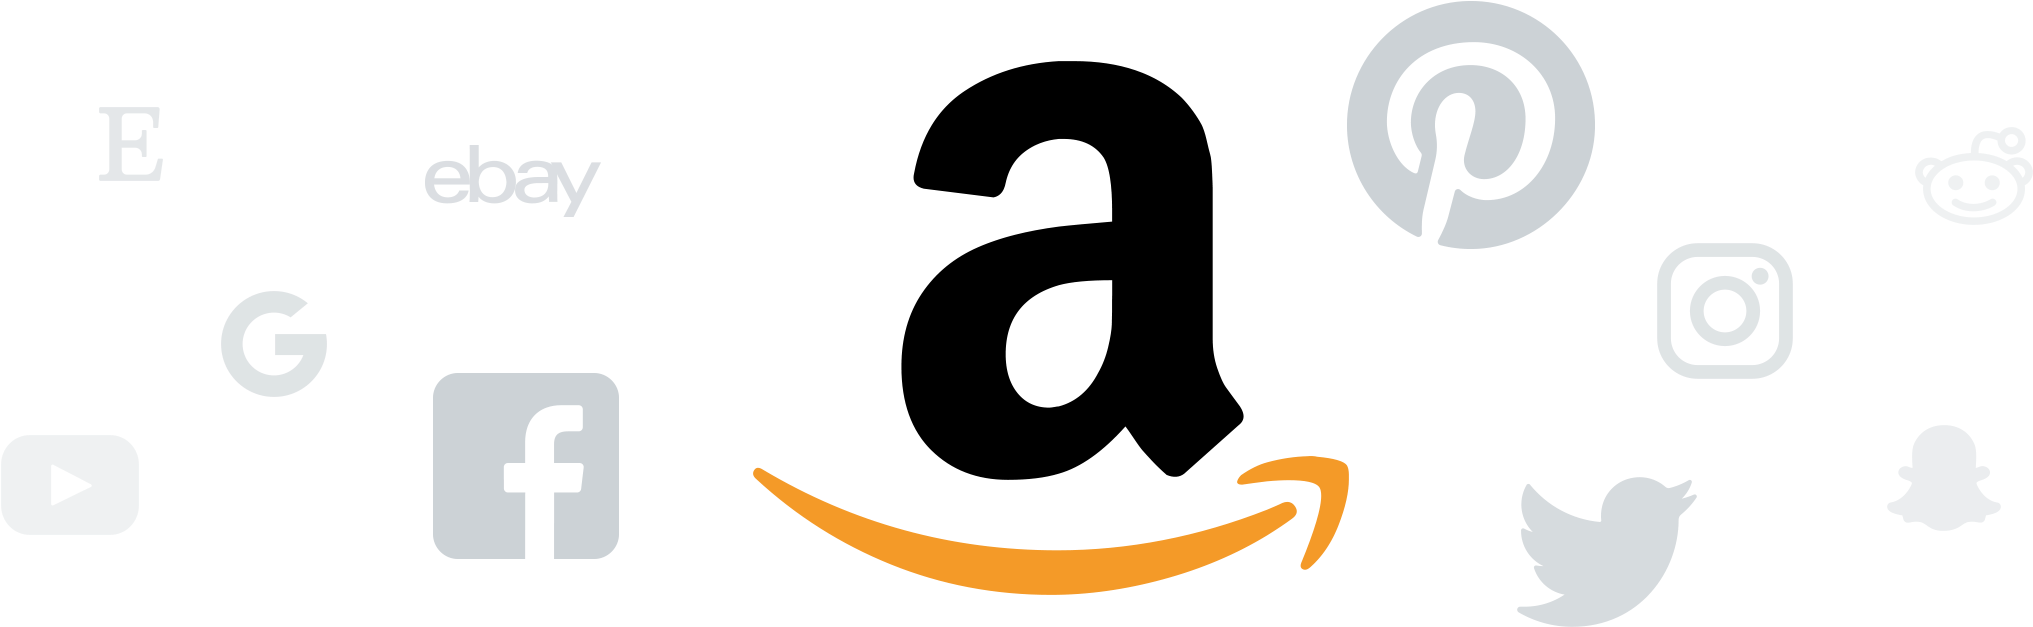 2280 X 740 5 - Amazon.com, Inc. (2280x740)